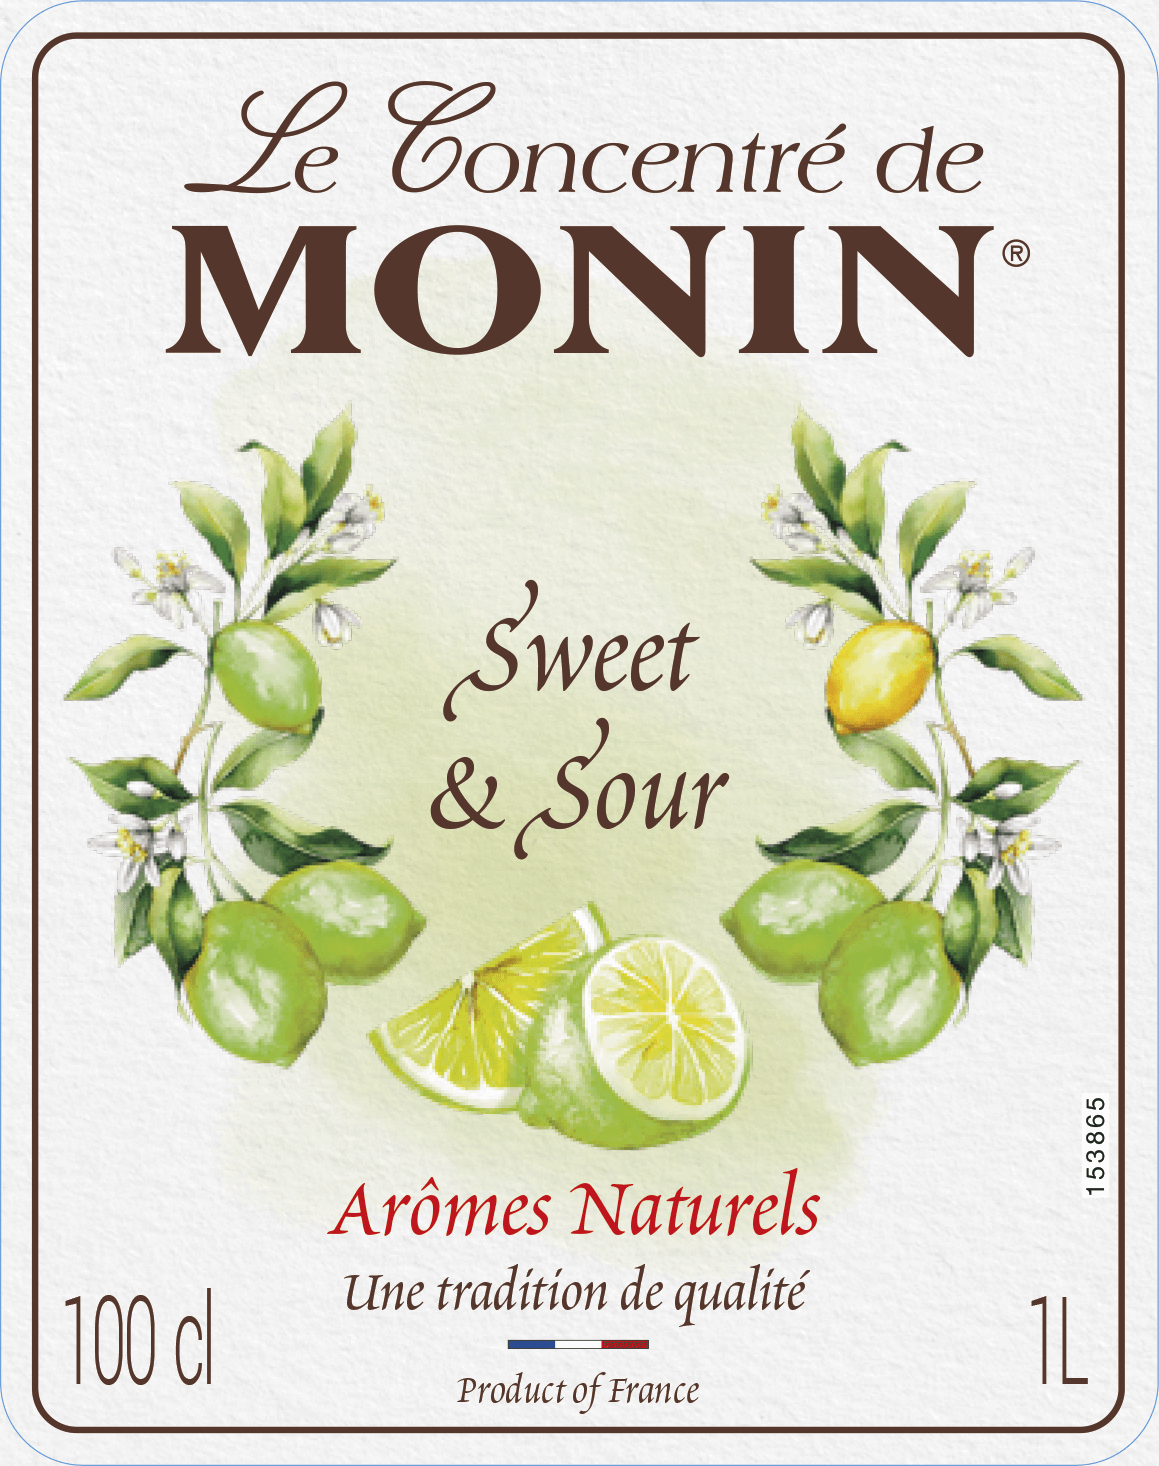 monin sweet & sour syrup label